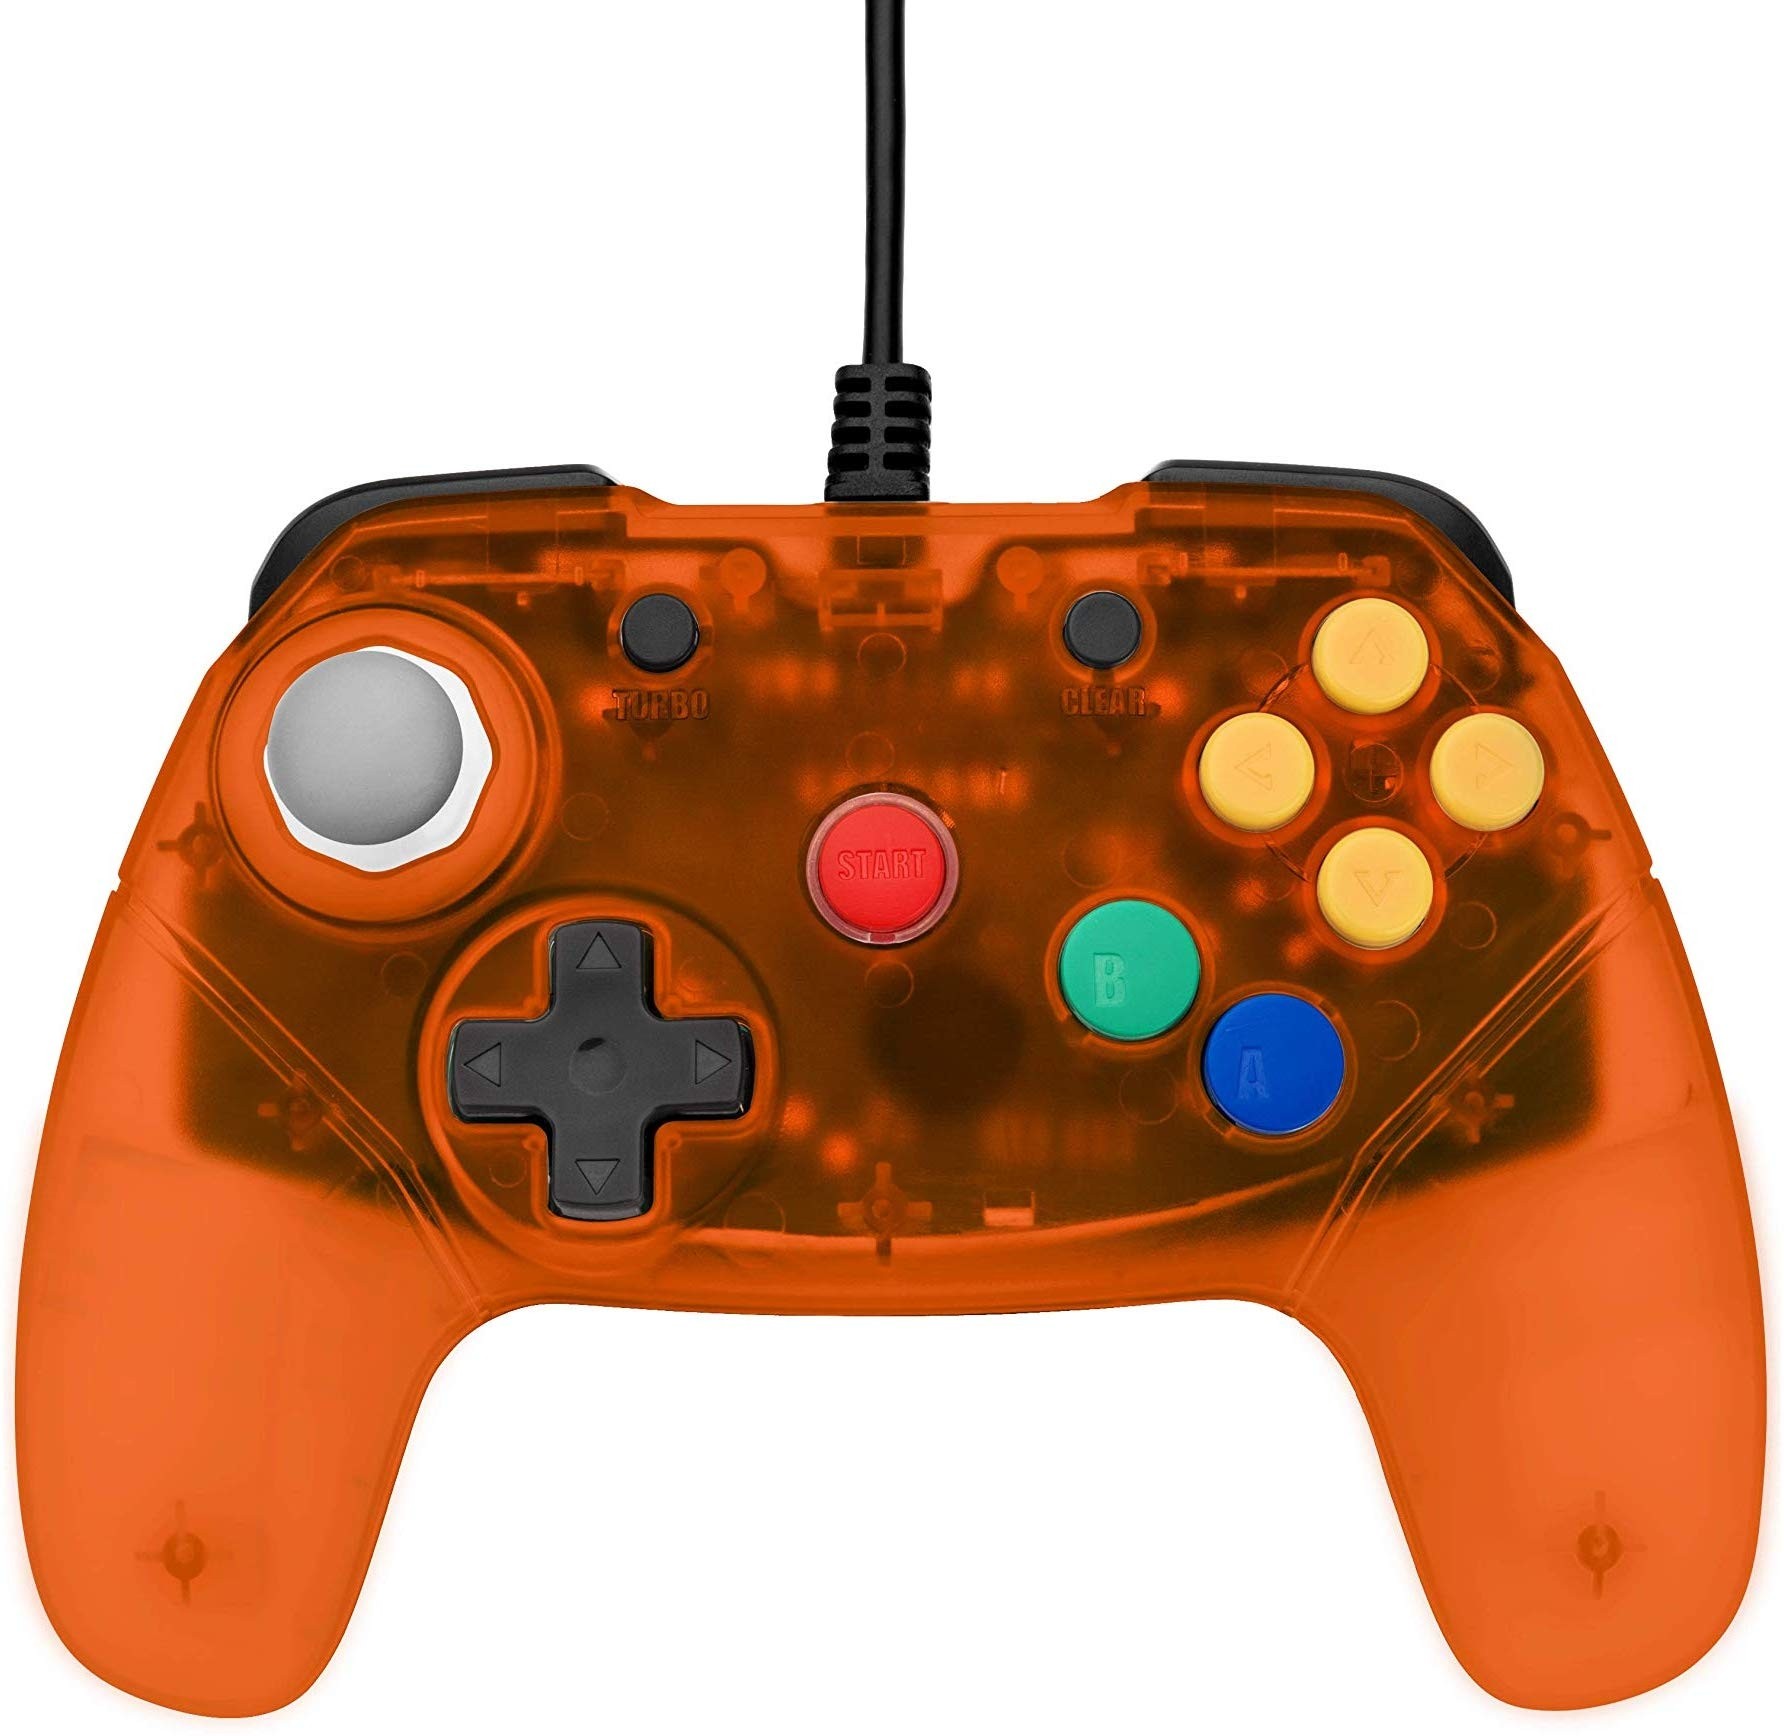 Retro Fighters Brawler64 Controller - Orange